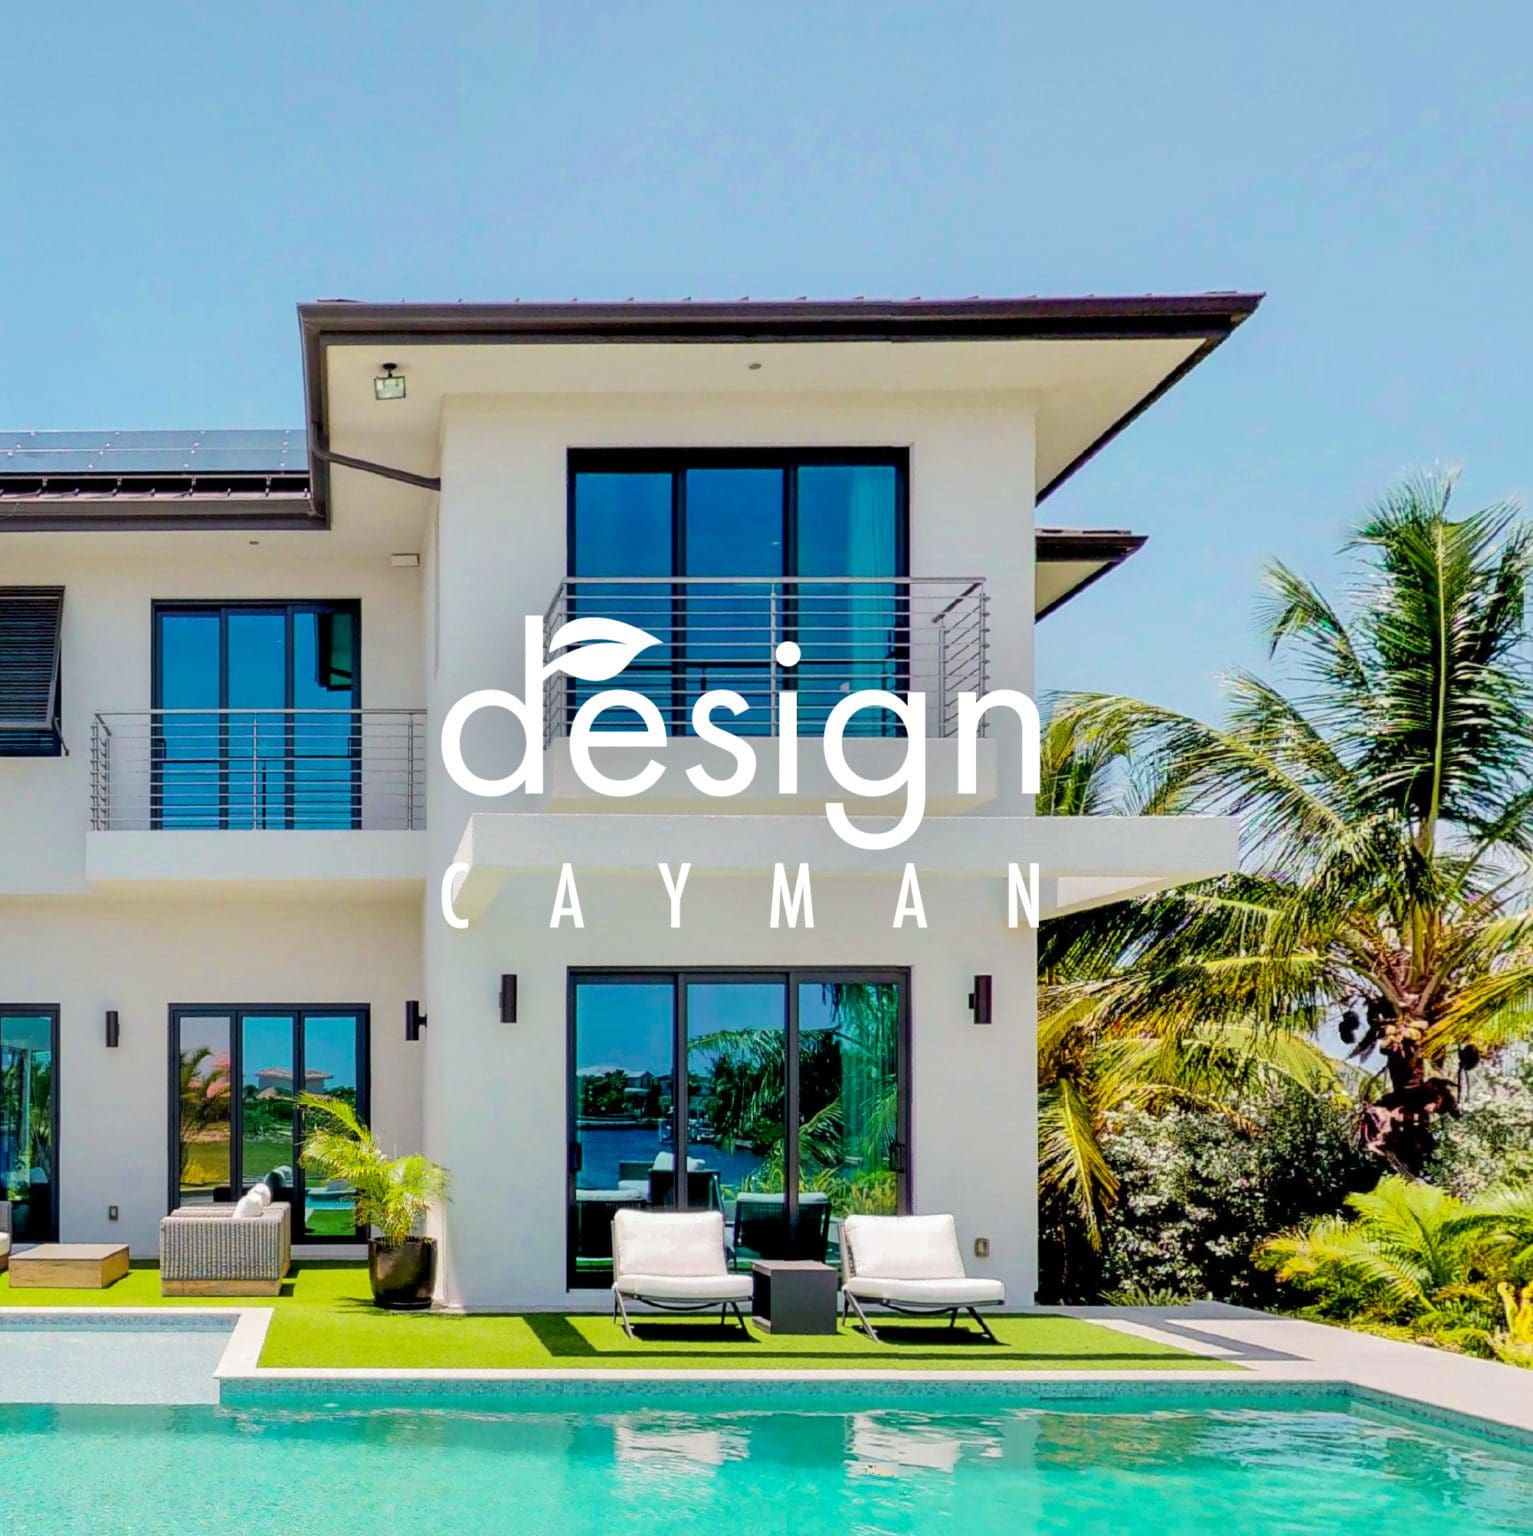 Design Cayman